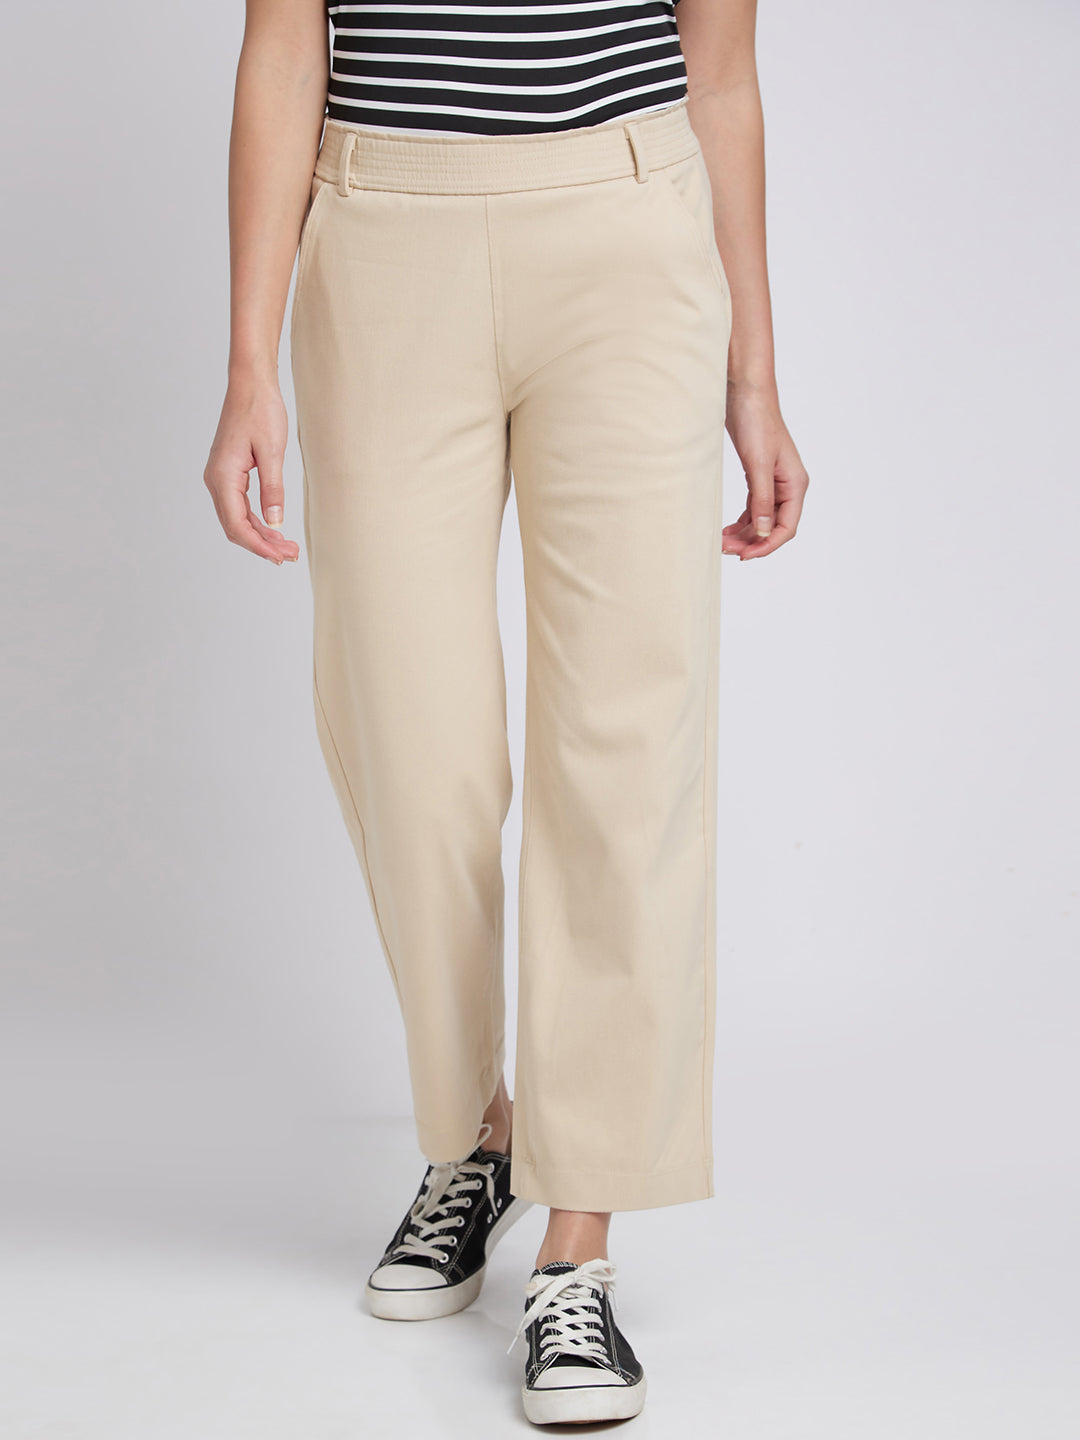 Buy Juniper Women's Beige Cotton Spandex Solid Straight Pant(Beige-S) at  Amazon.in